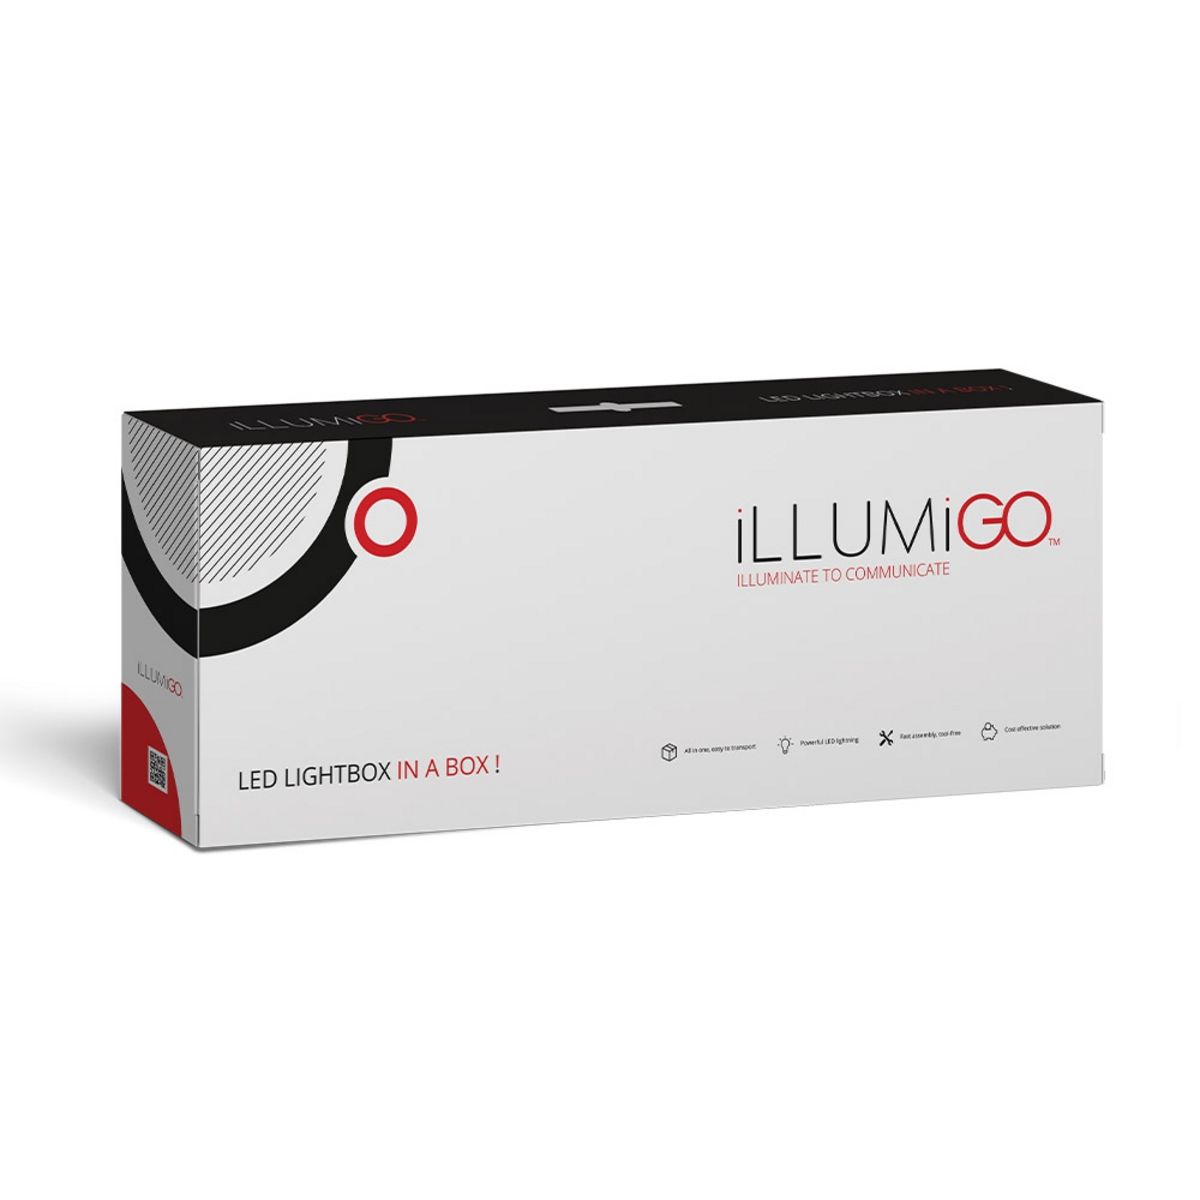 illumigo-retail-2-second-79968.jpg